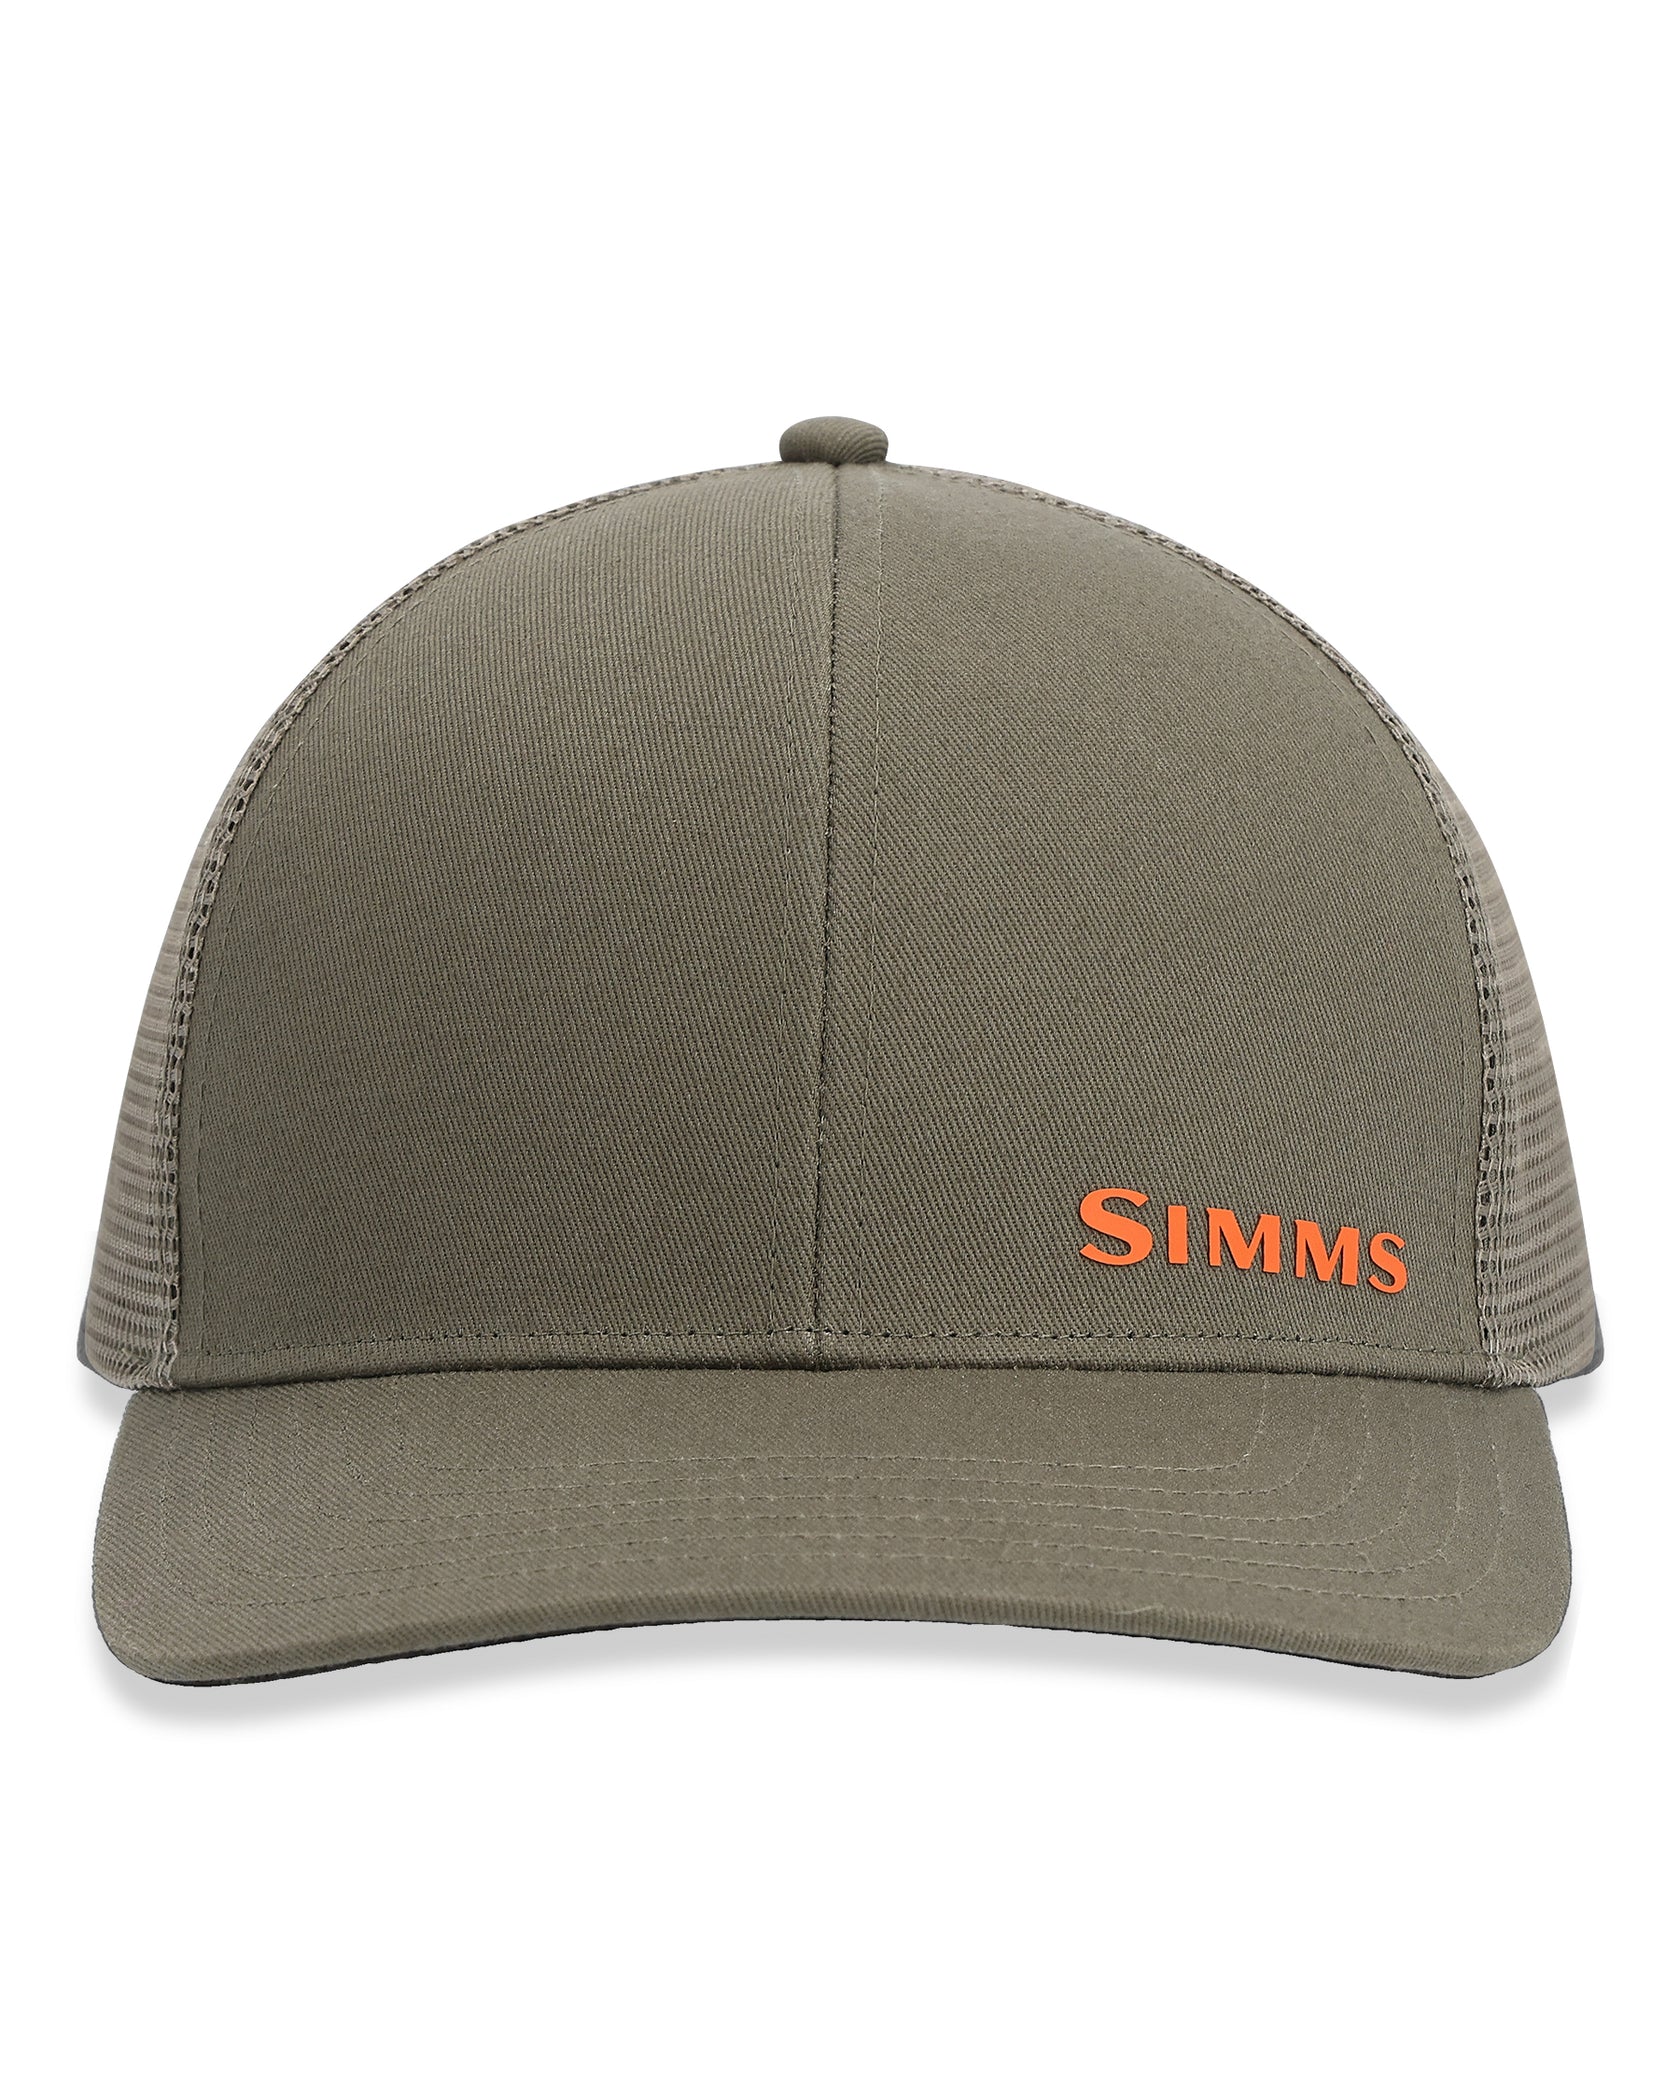 Simms ID Trucker Hat - Heather Grey